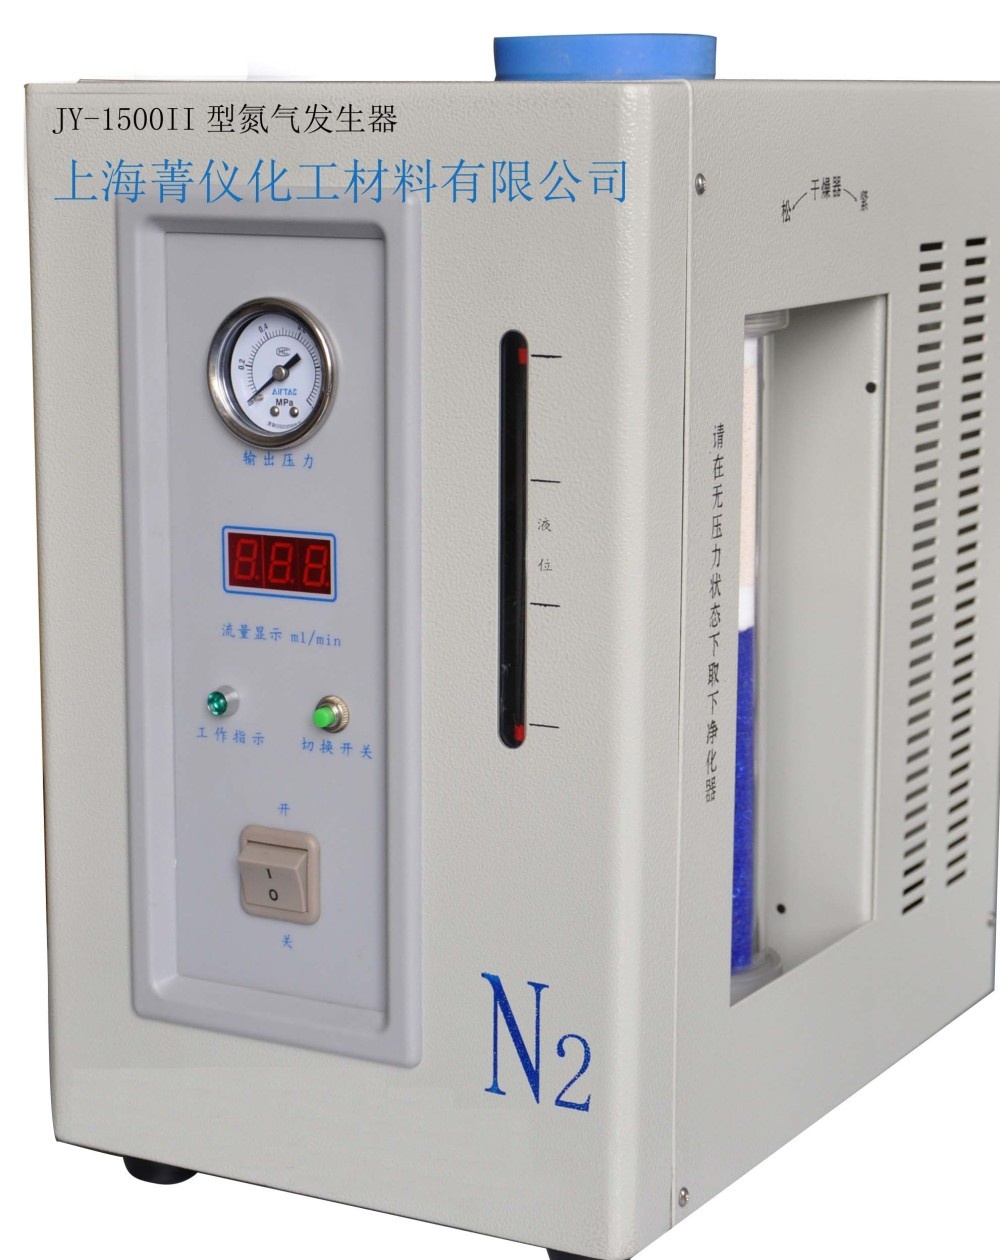 JY-1500II型氮气发生器的图片